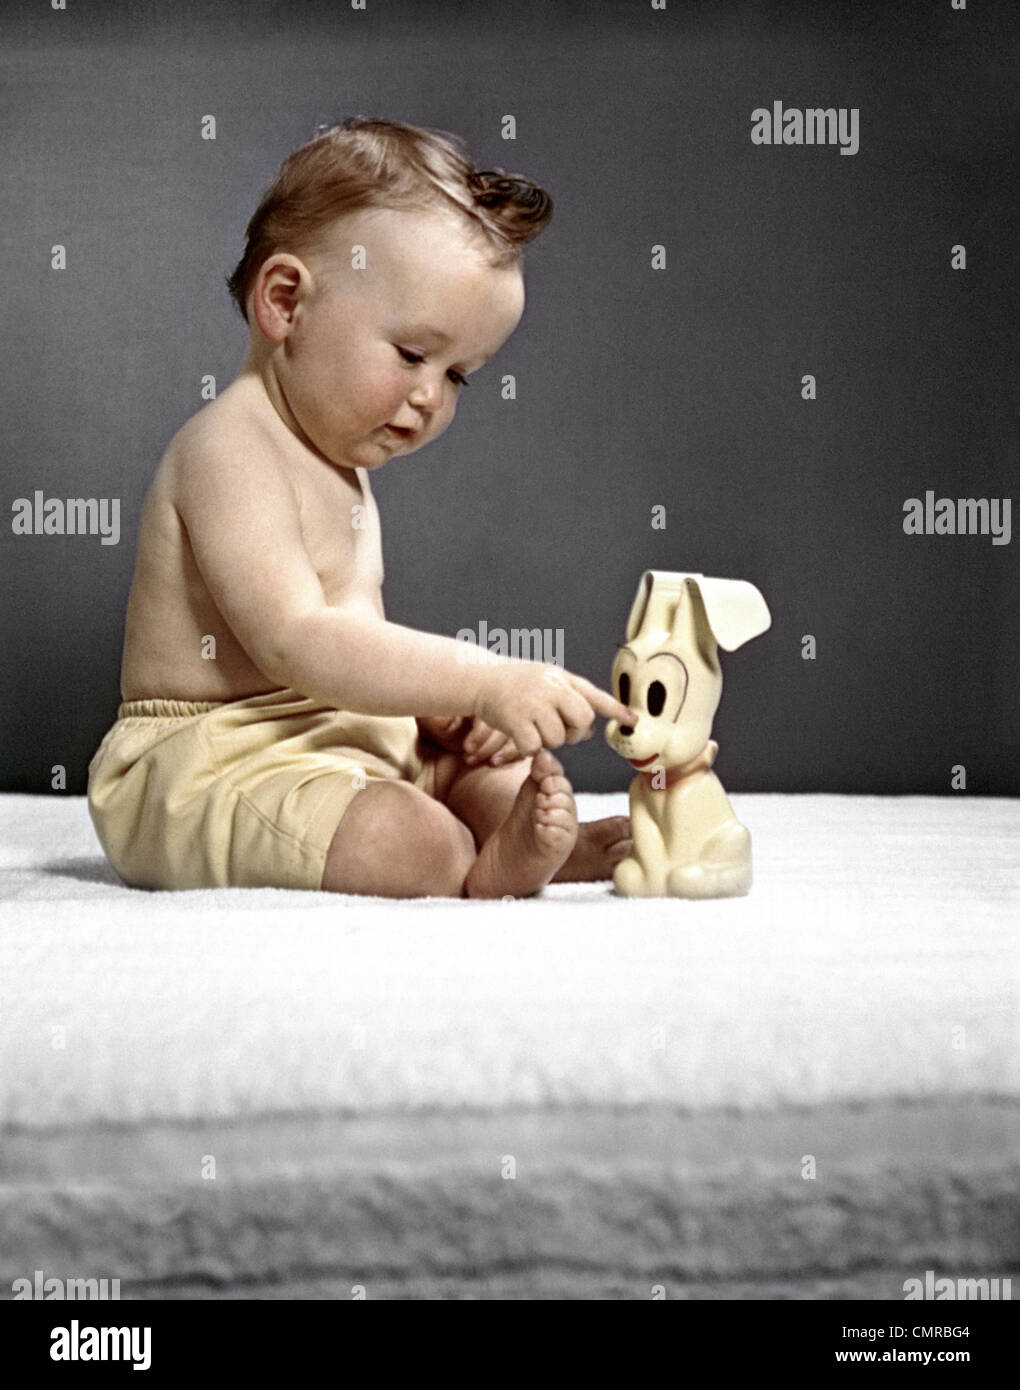 Années 1940 Années 1950 BABY SITTING TOUCHER TOY DOG Banque D'Images